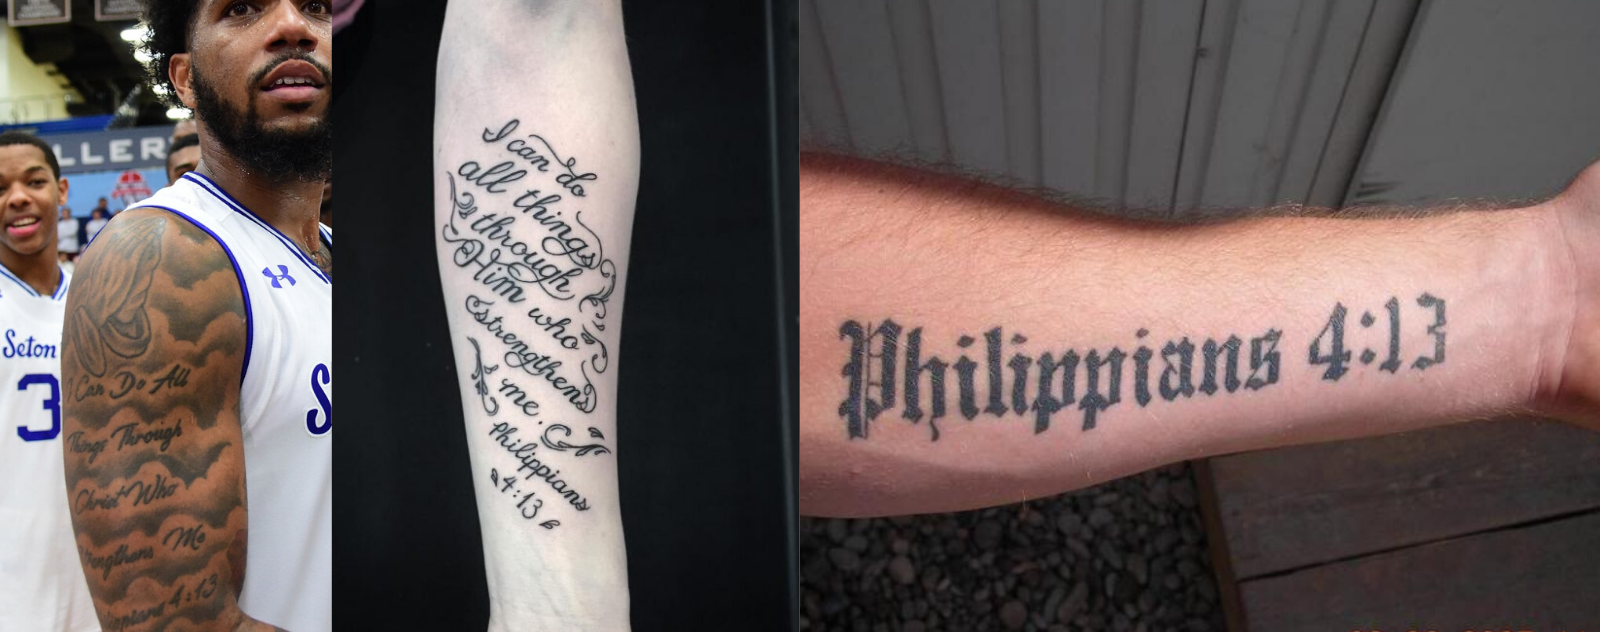 philippians-4-13-tattoo-forearm-9